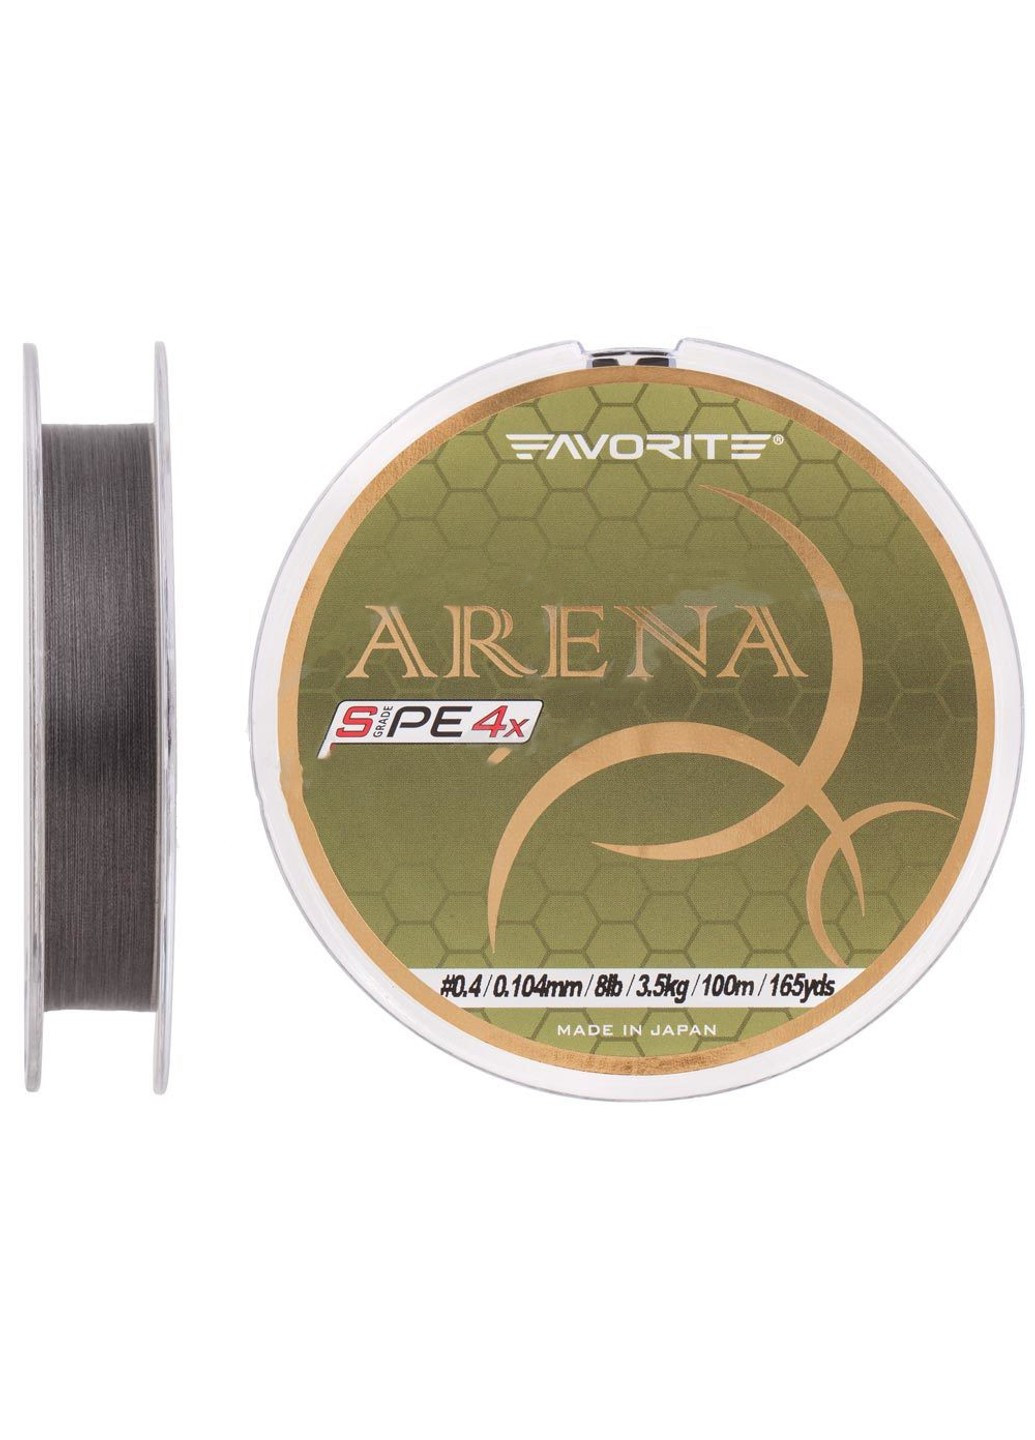 Шнур Arena PE 4x 100m (silver gray) #0.2/0.076mm 5lb/2.1kg (1693-10-93) Favorite (252468291)